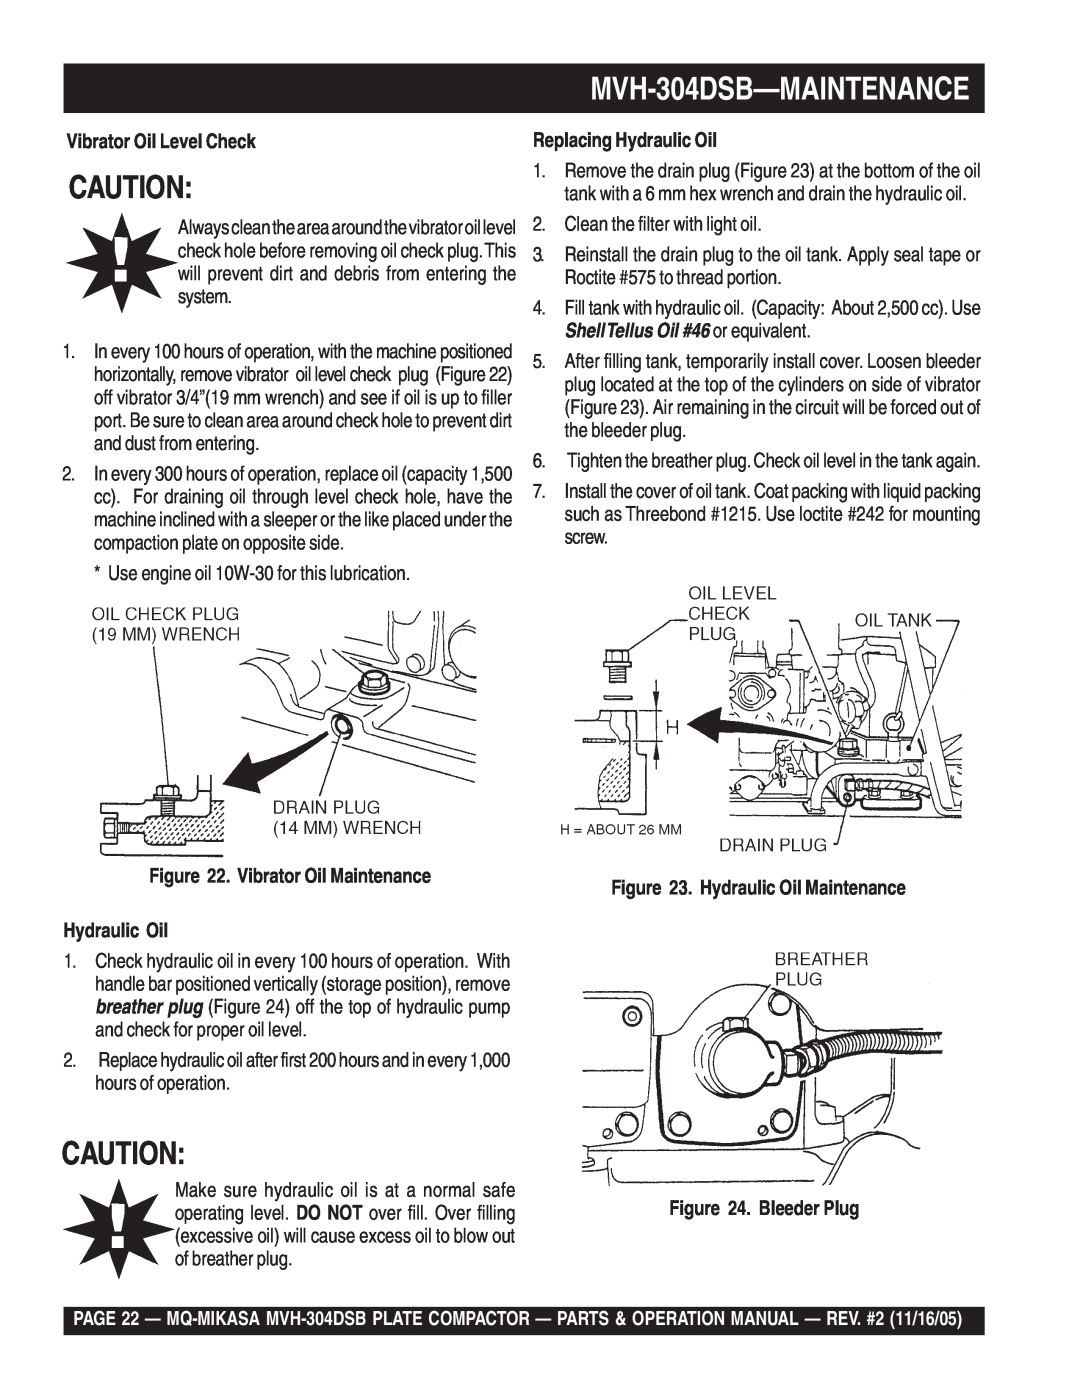 Multiquip operation manual MVH-304DSB-MAINTENANCE, Vibrator Oil Level Check, Vibrator Oil Maintenance Hydraulic Oil 